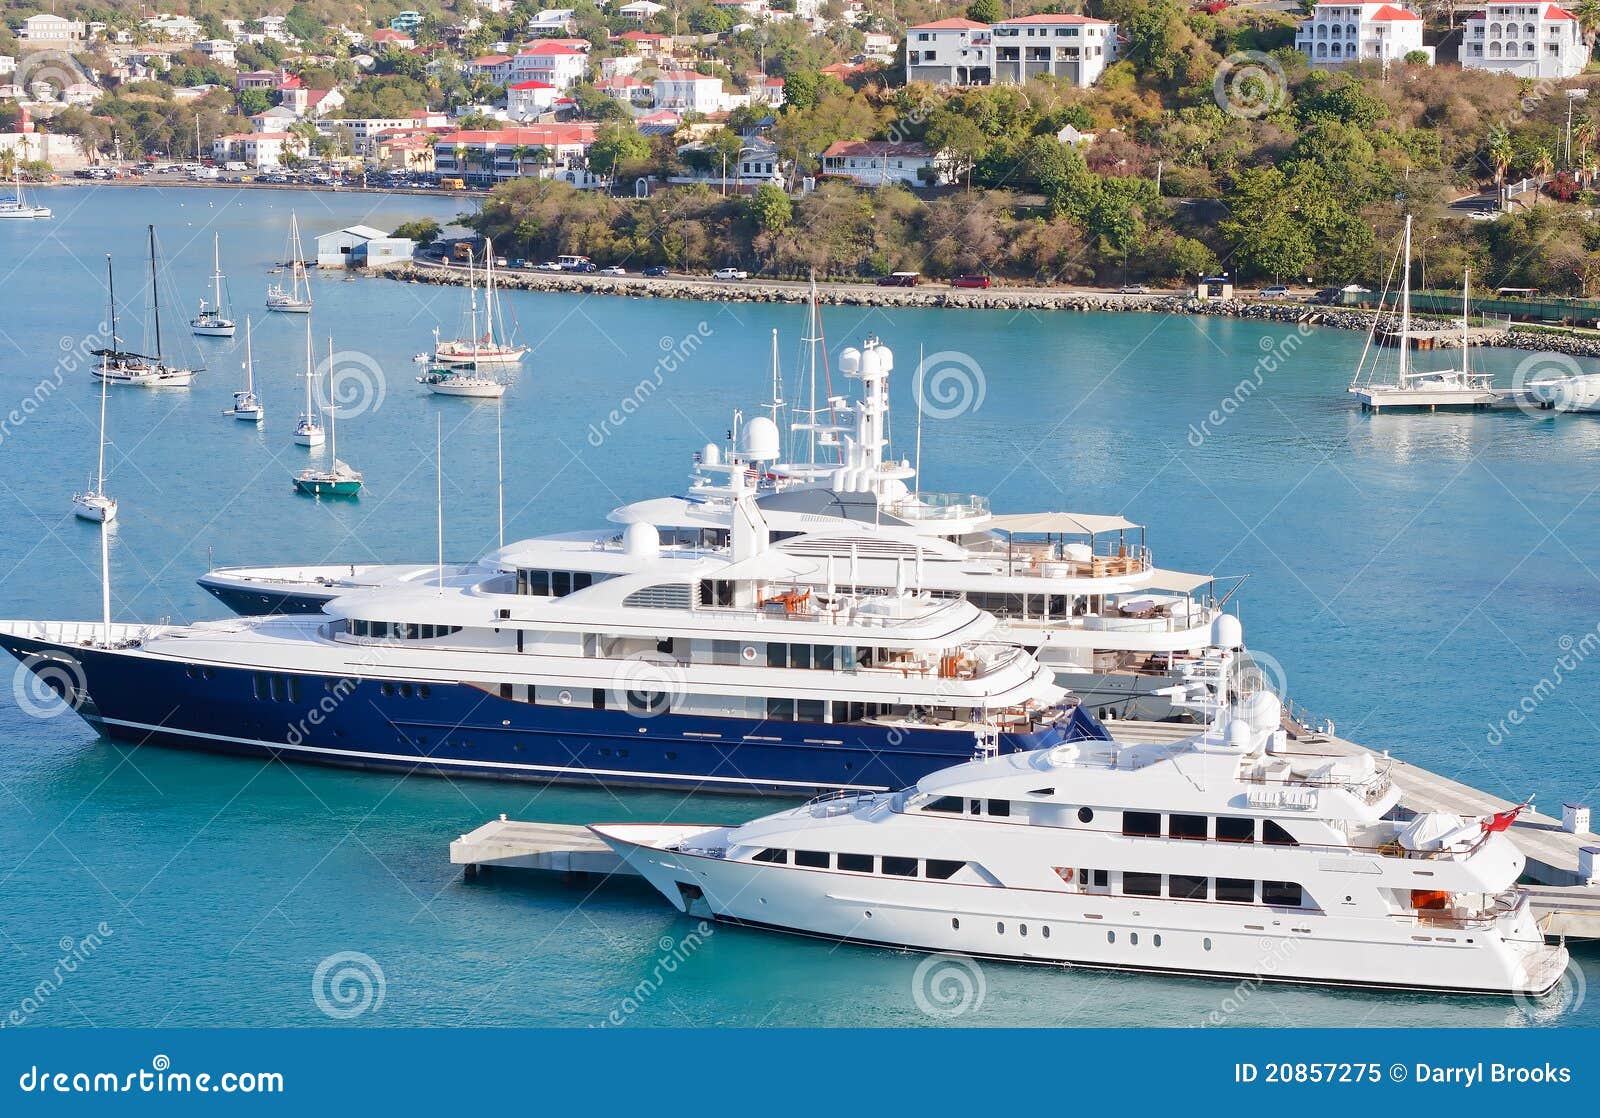 blue bay yachts